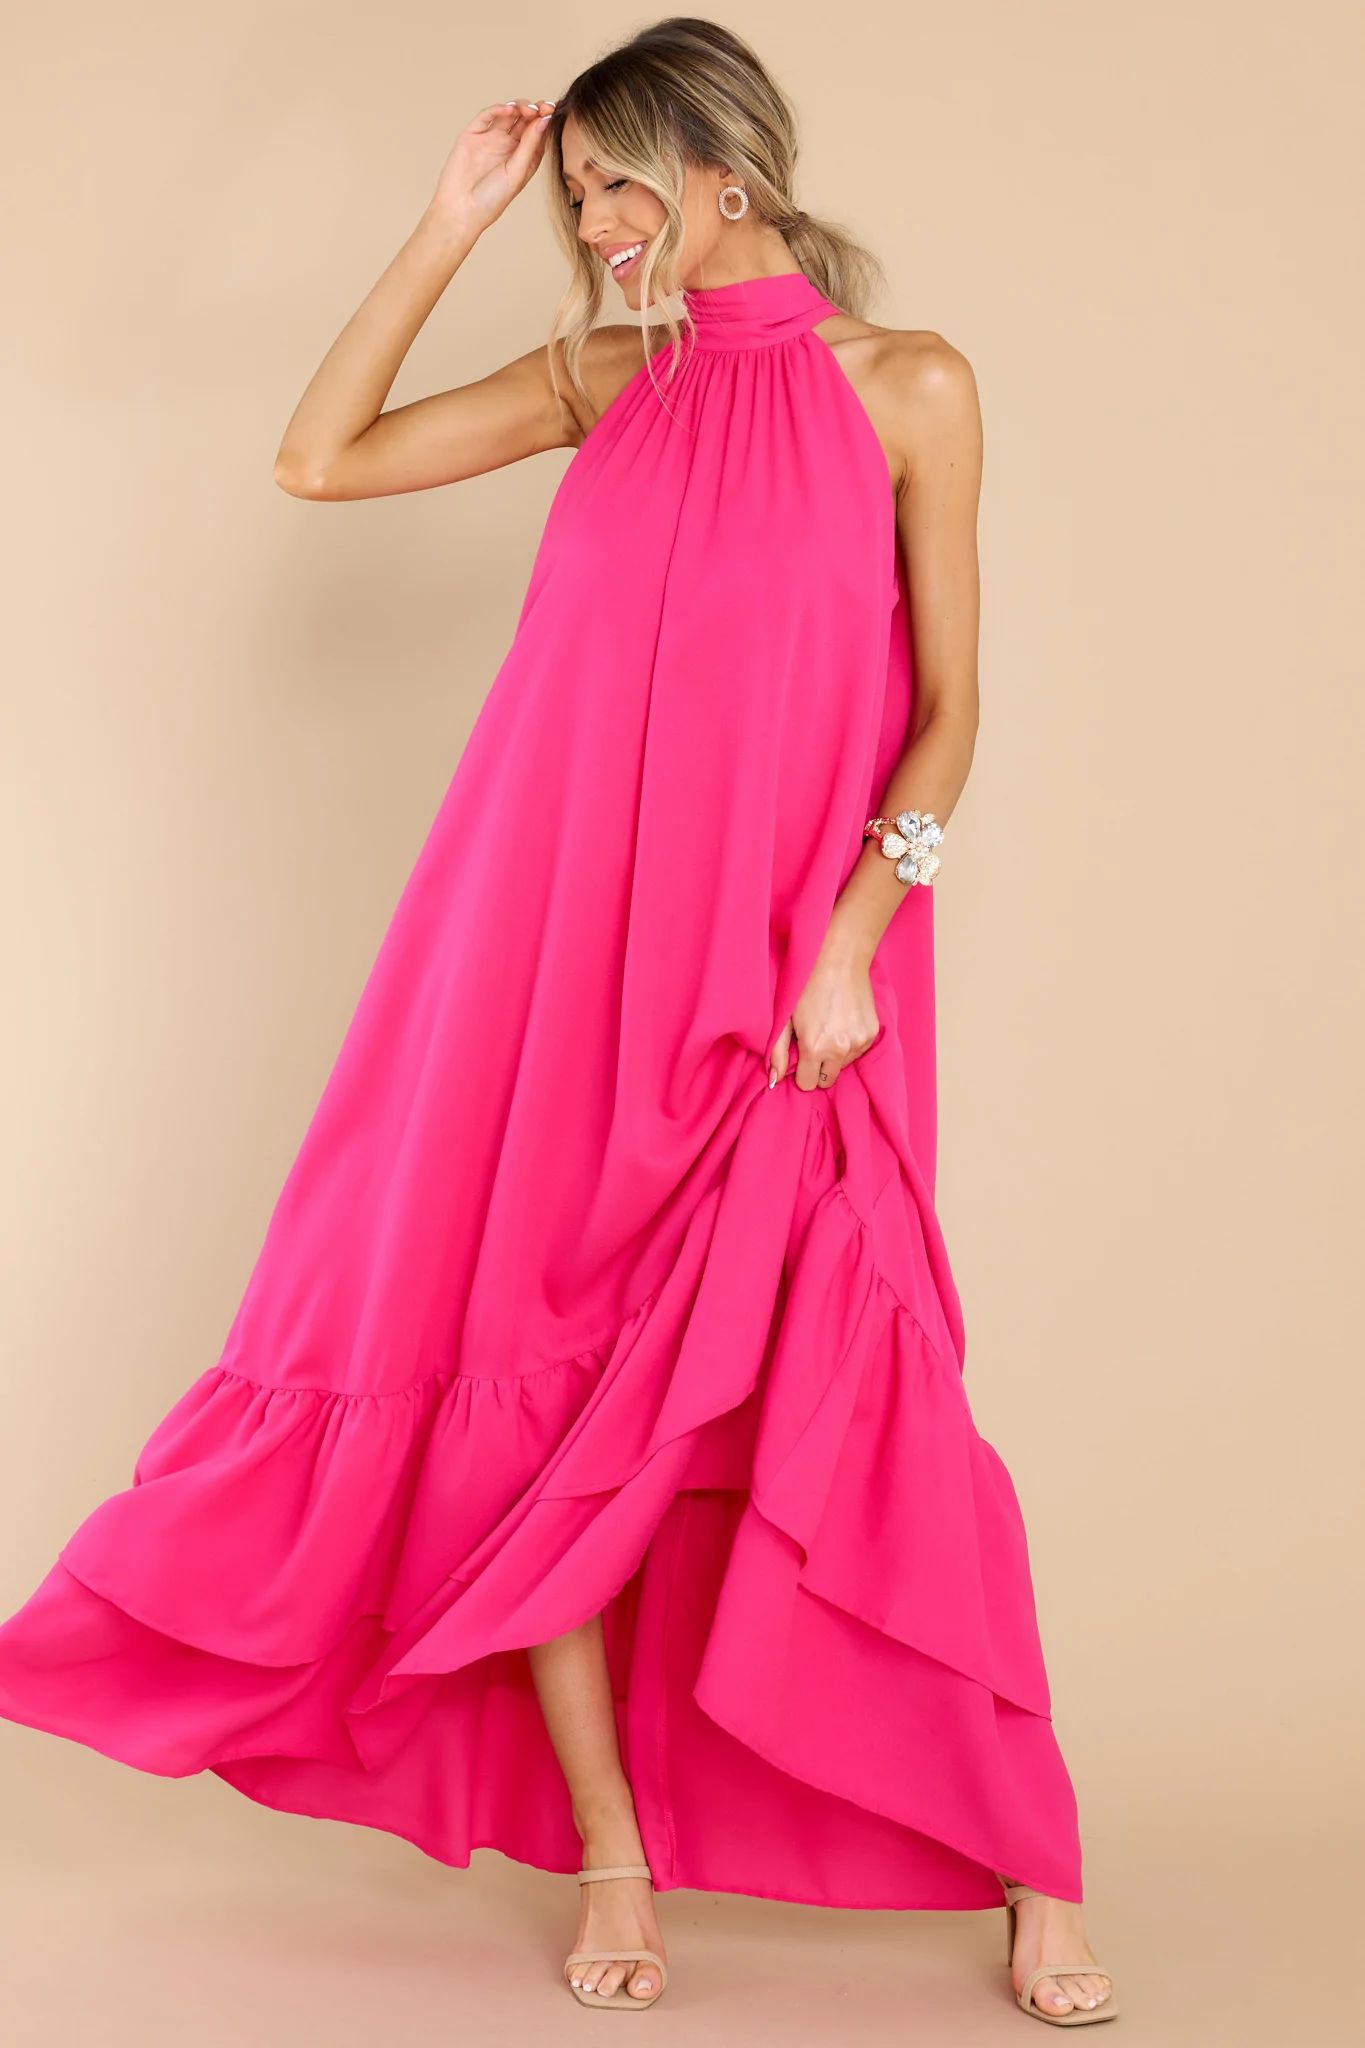 She Is Magic Hot Pink Maxi Dress | Red Dress 